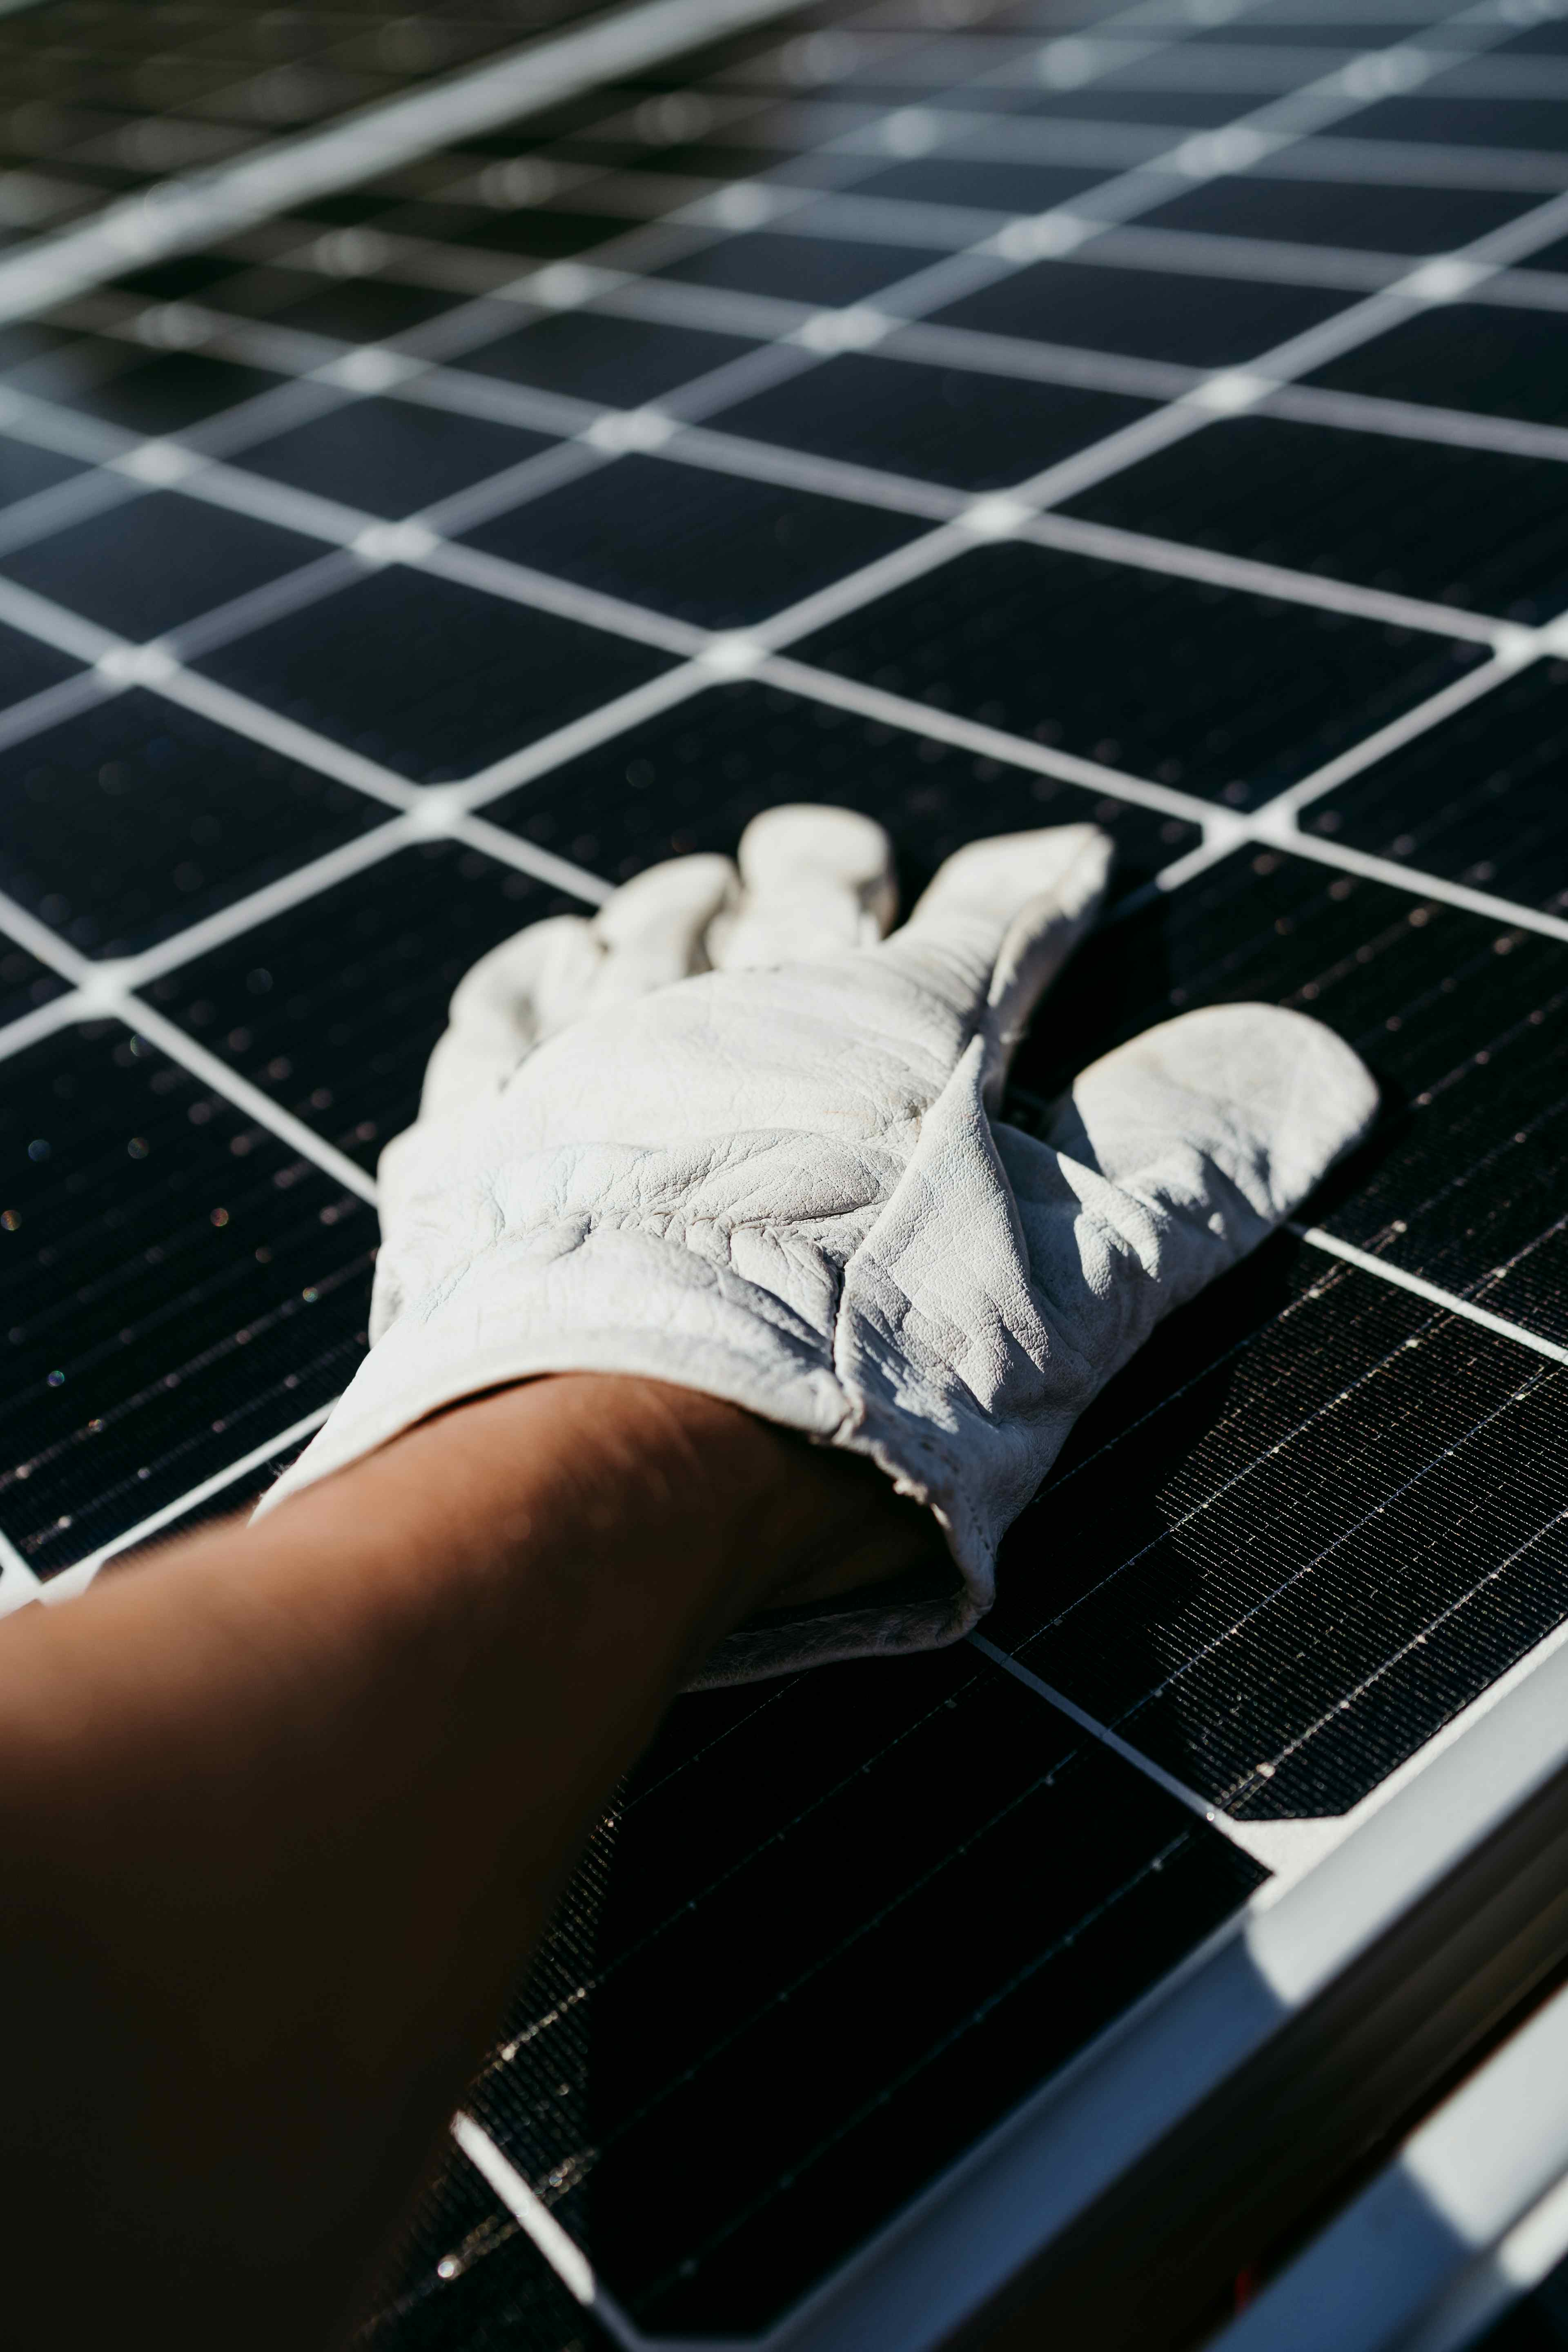 Hand of technician touching solar panel